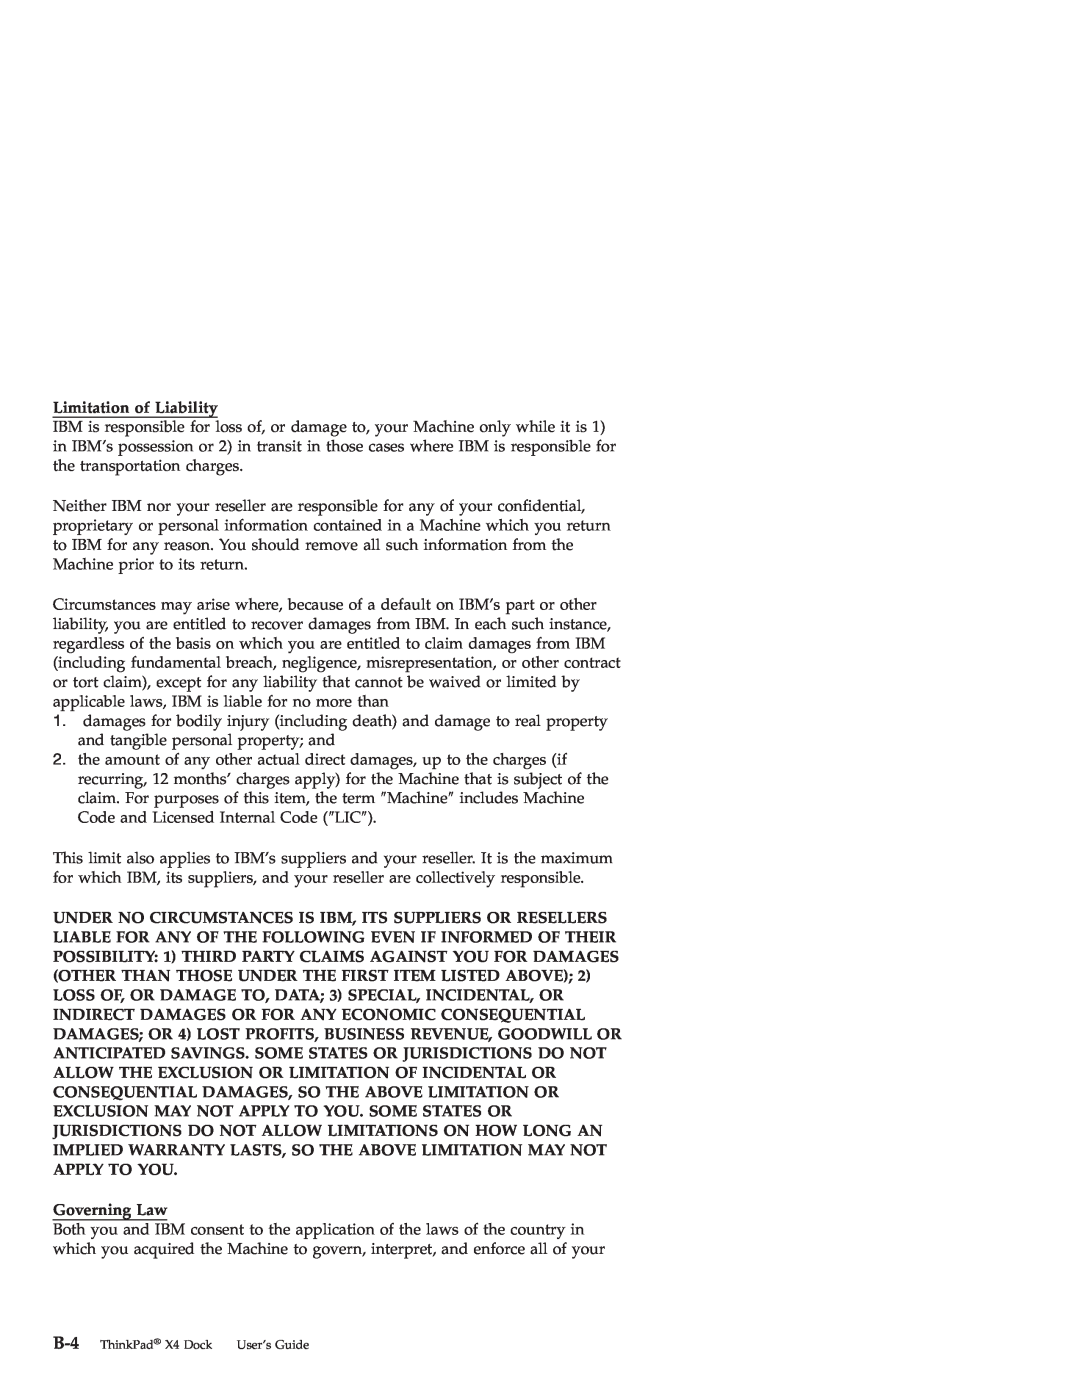 IBM X4 manual Limitation of Liability, Governing Law 